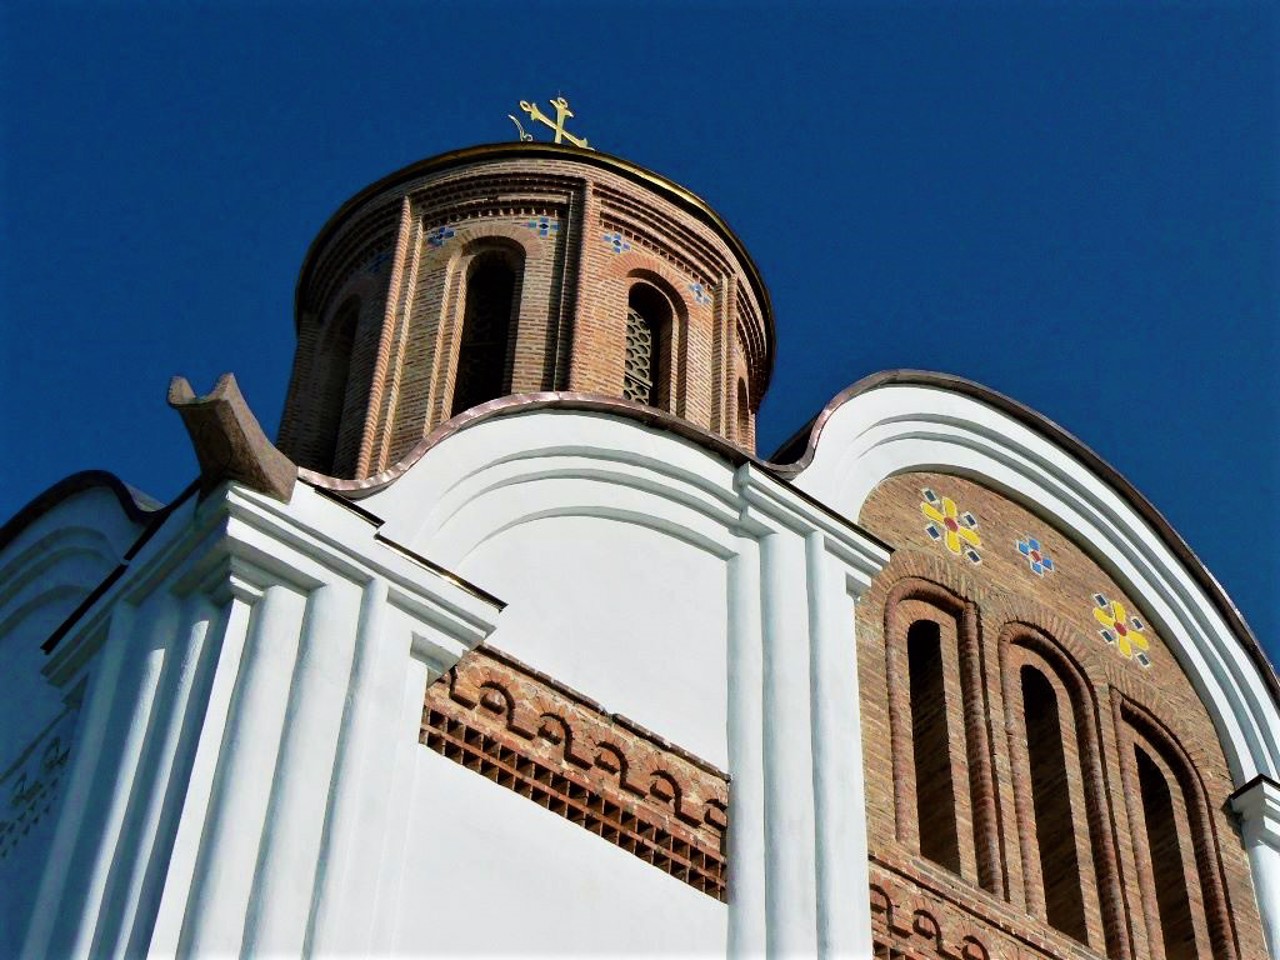 Храм Святого Георгия Победоносца